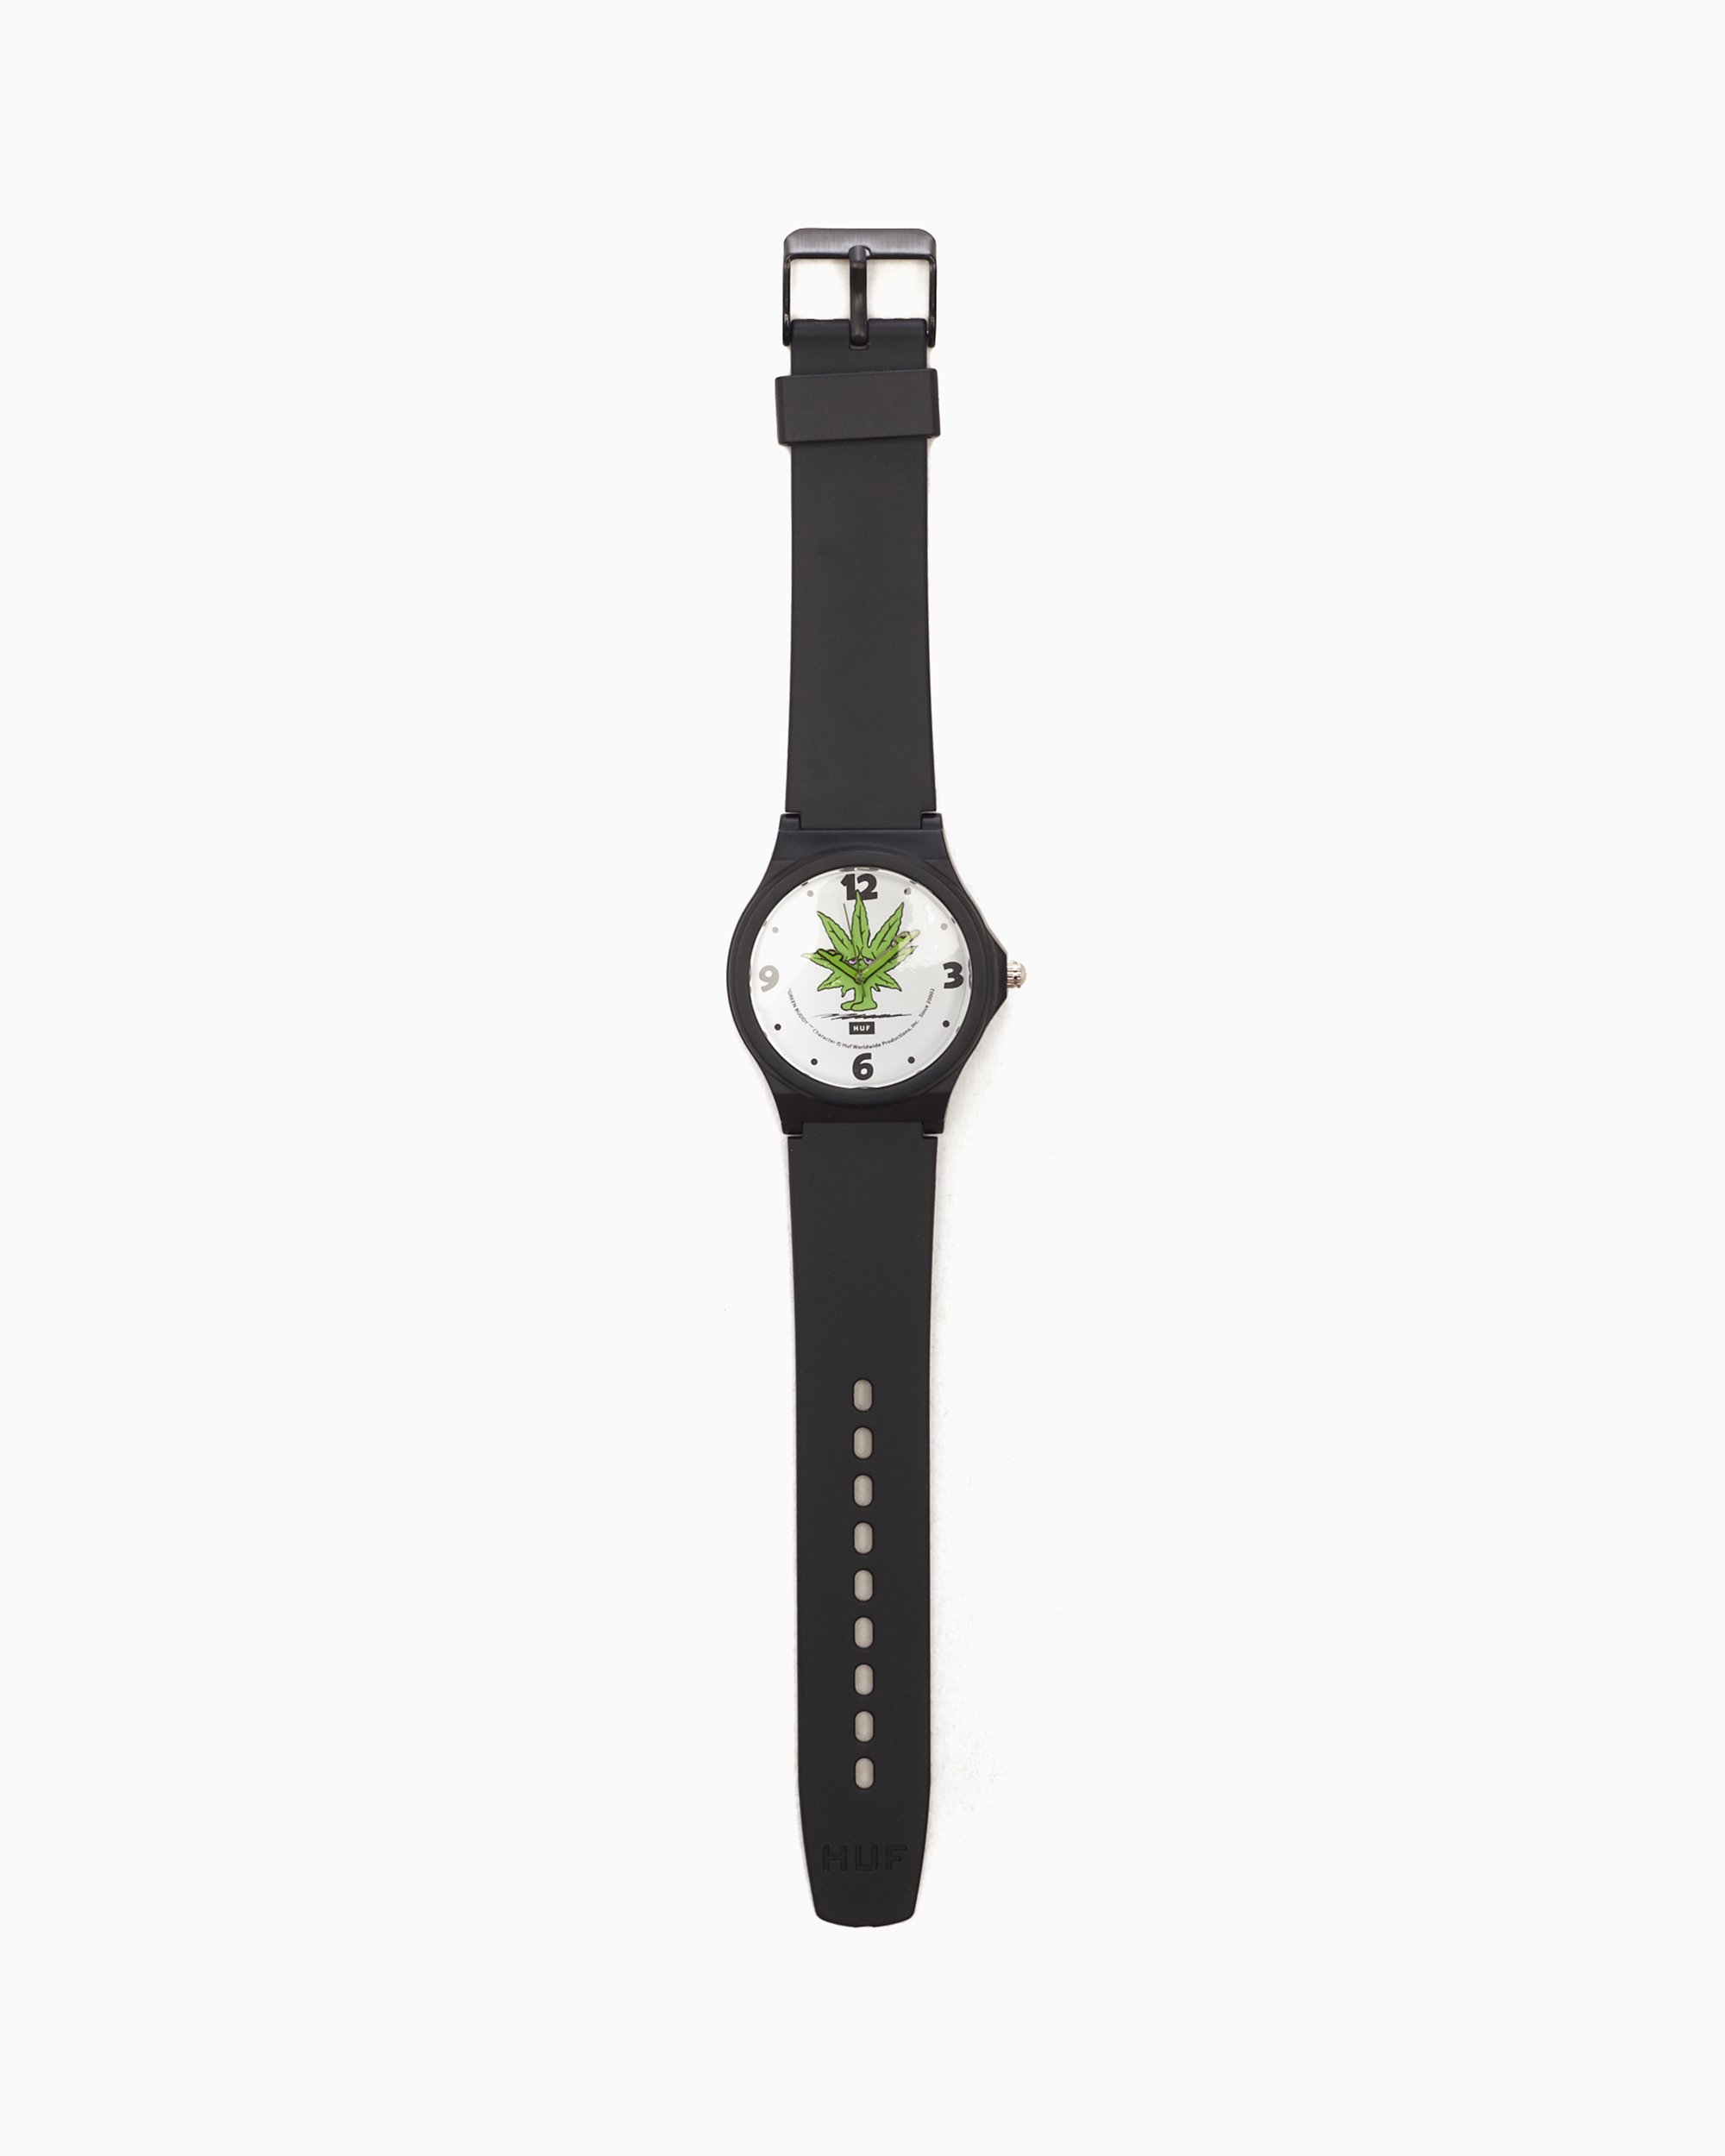 Buddy Watch Generation 2 4G Kids Smart Watch, Whatsapp, LINE, Google  Translate, App Store, Video Call, SOS Emergency Call, Face Recognition &  More [GLOBAL VERSION] (Blue Buddy Watch Gen 2) : Amazon.sg: Electronics